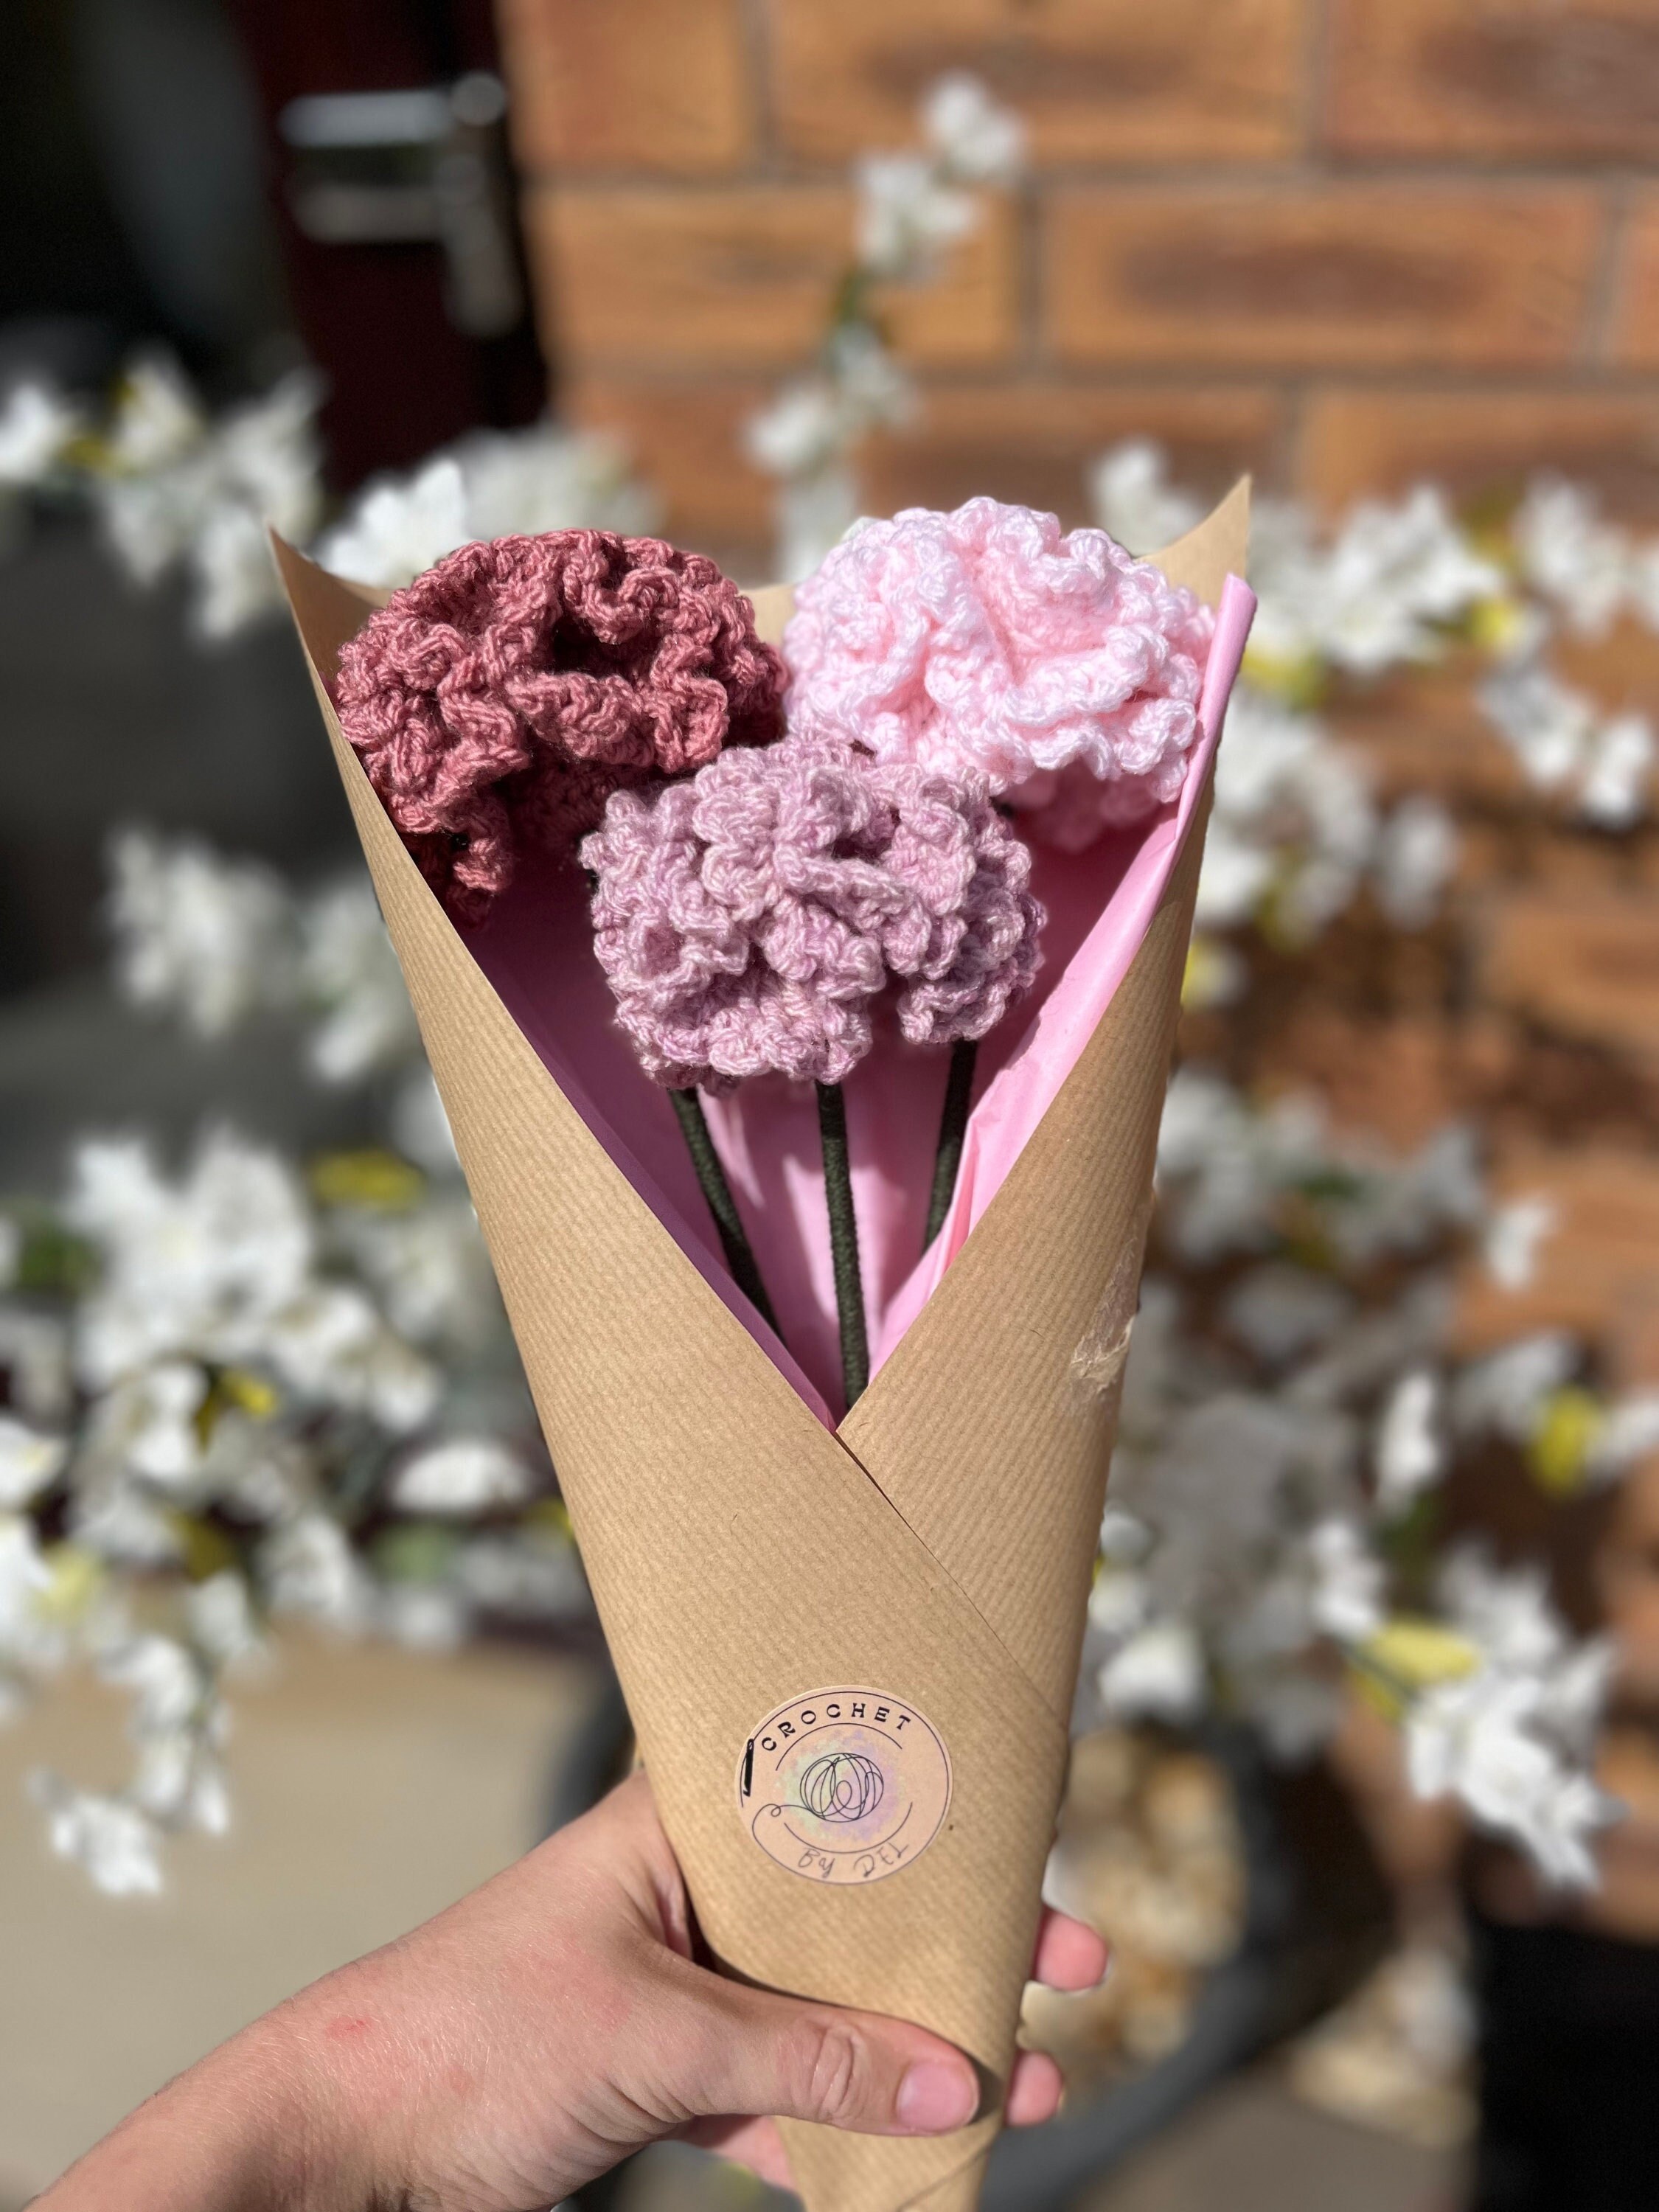 CROCHET KIT, DIY Everlasting Flower Kit, Make Your Own Bouquet,  Intermediate Level Crochet Project, Mother's Day, Valentine's Day 